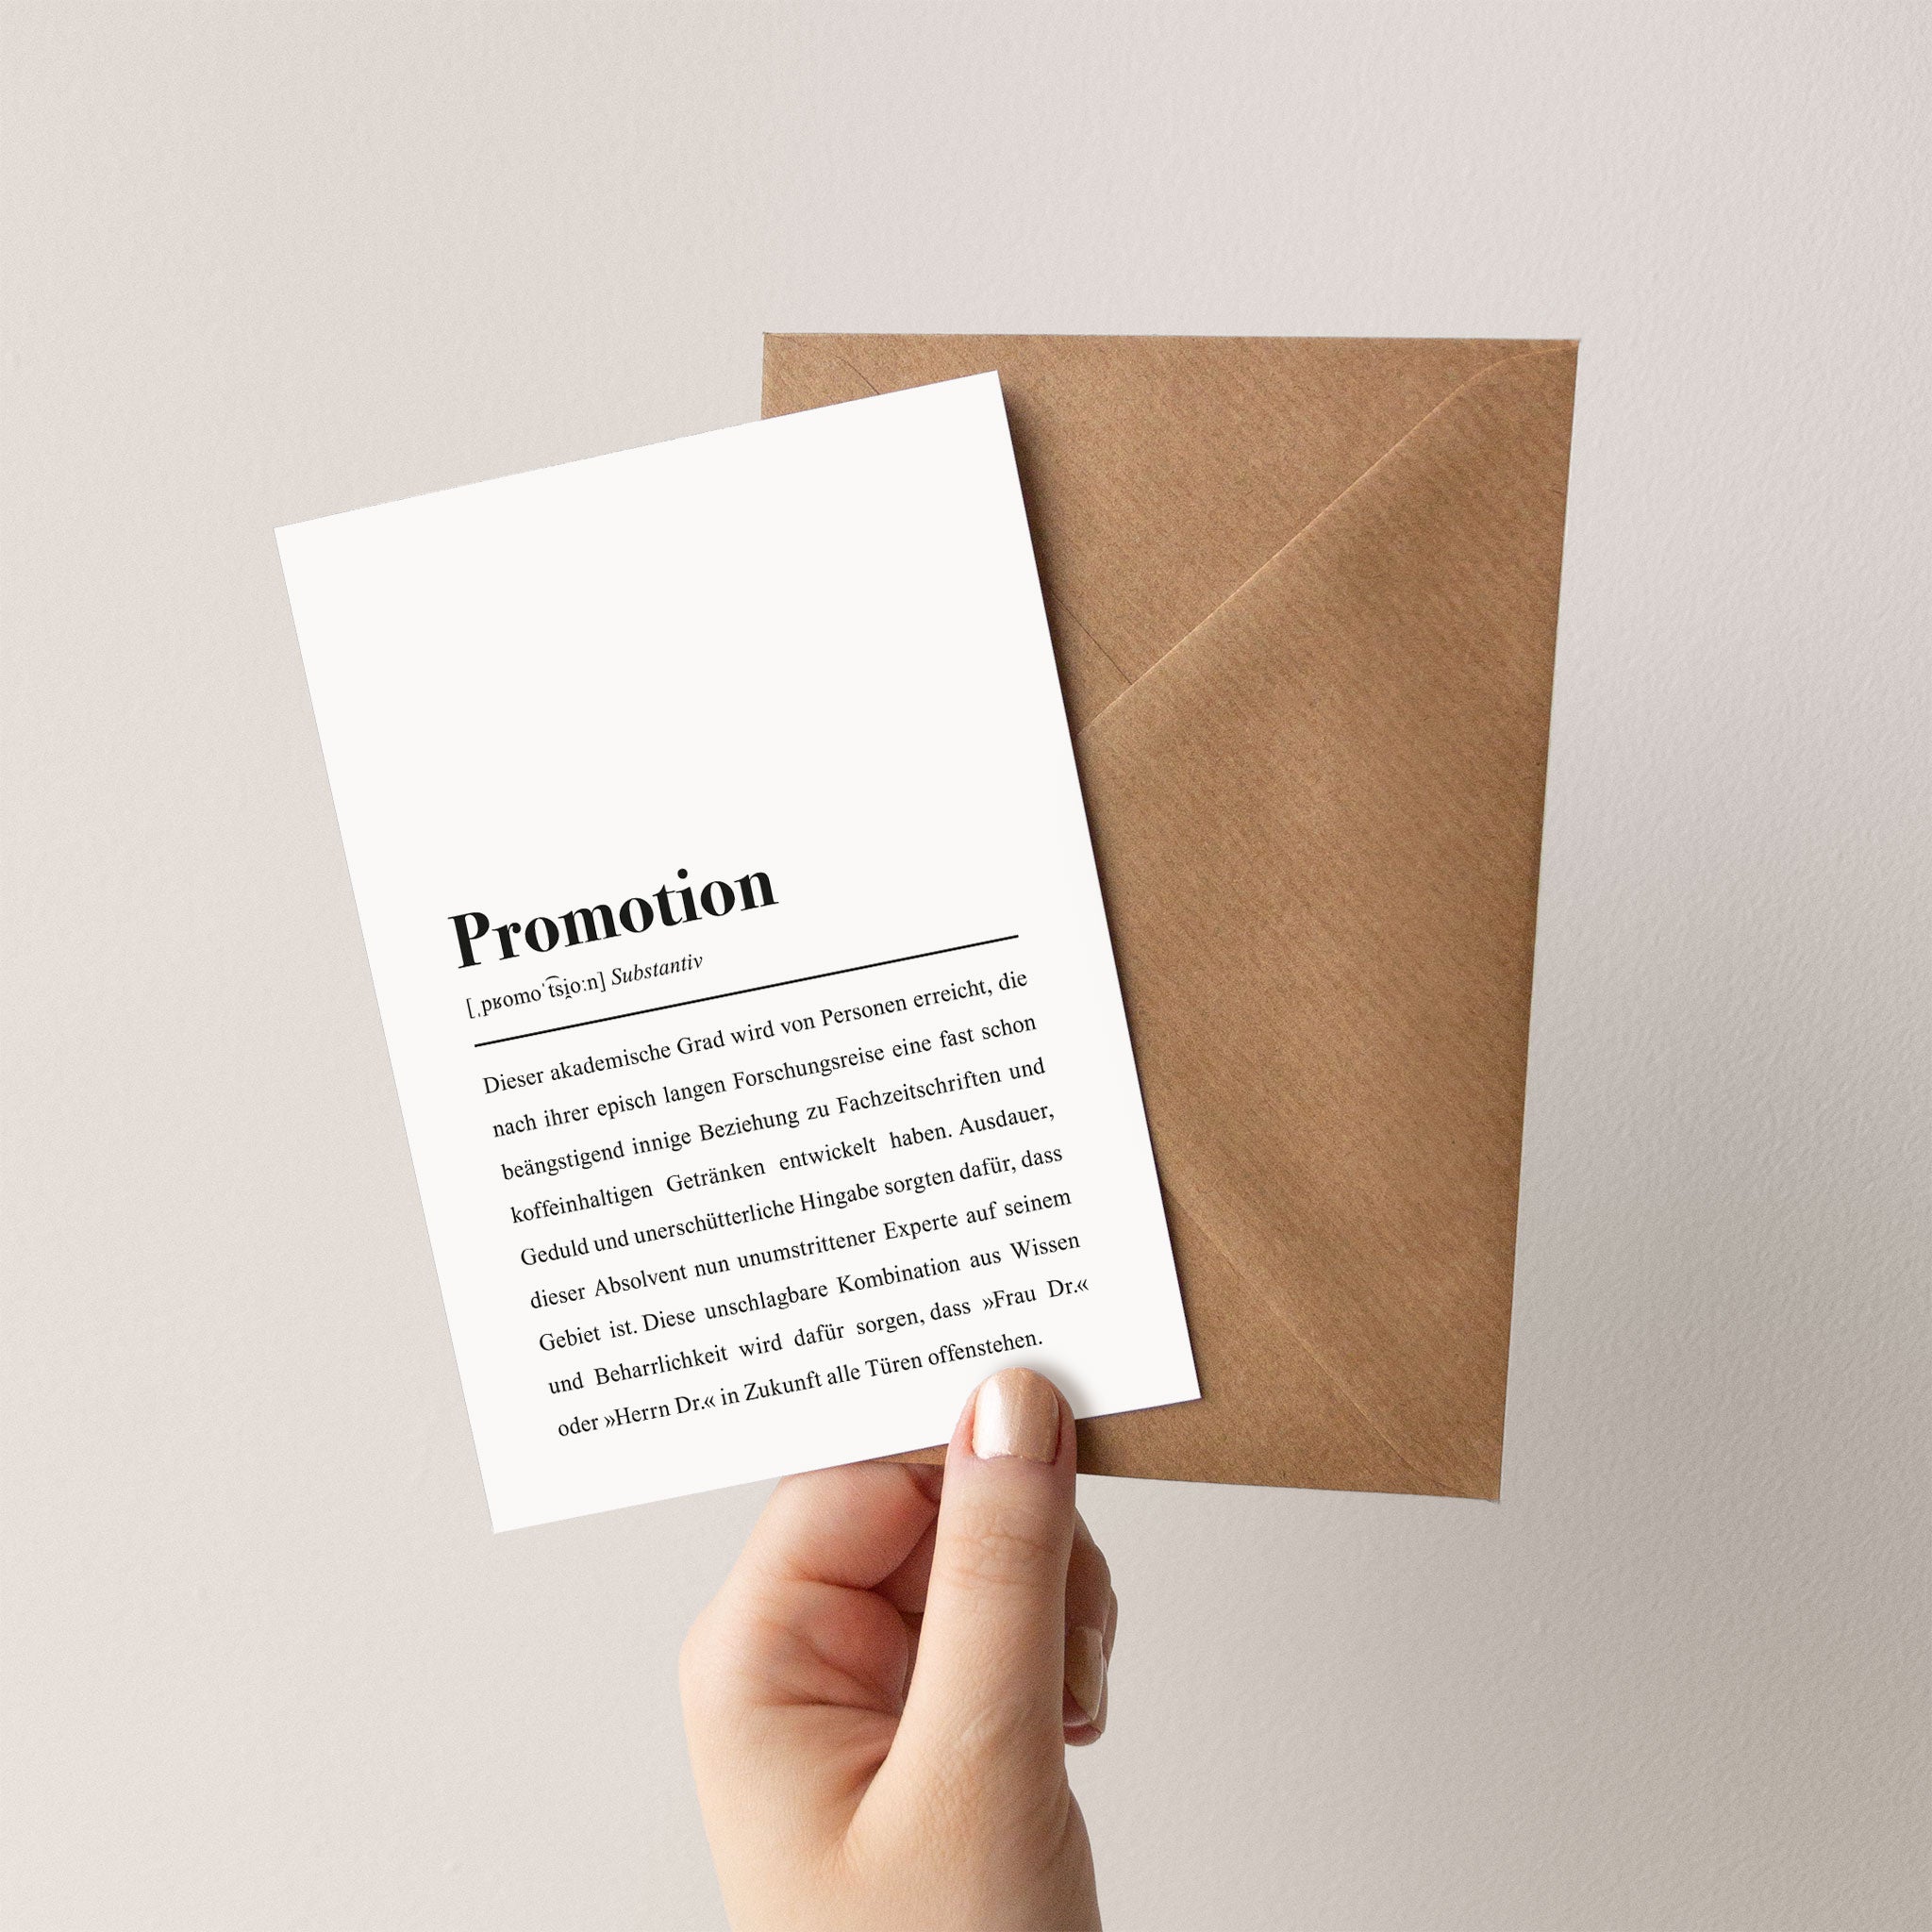 Promotion Definition: Grußkarte mit Umschlag